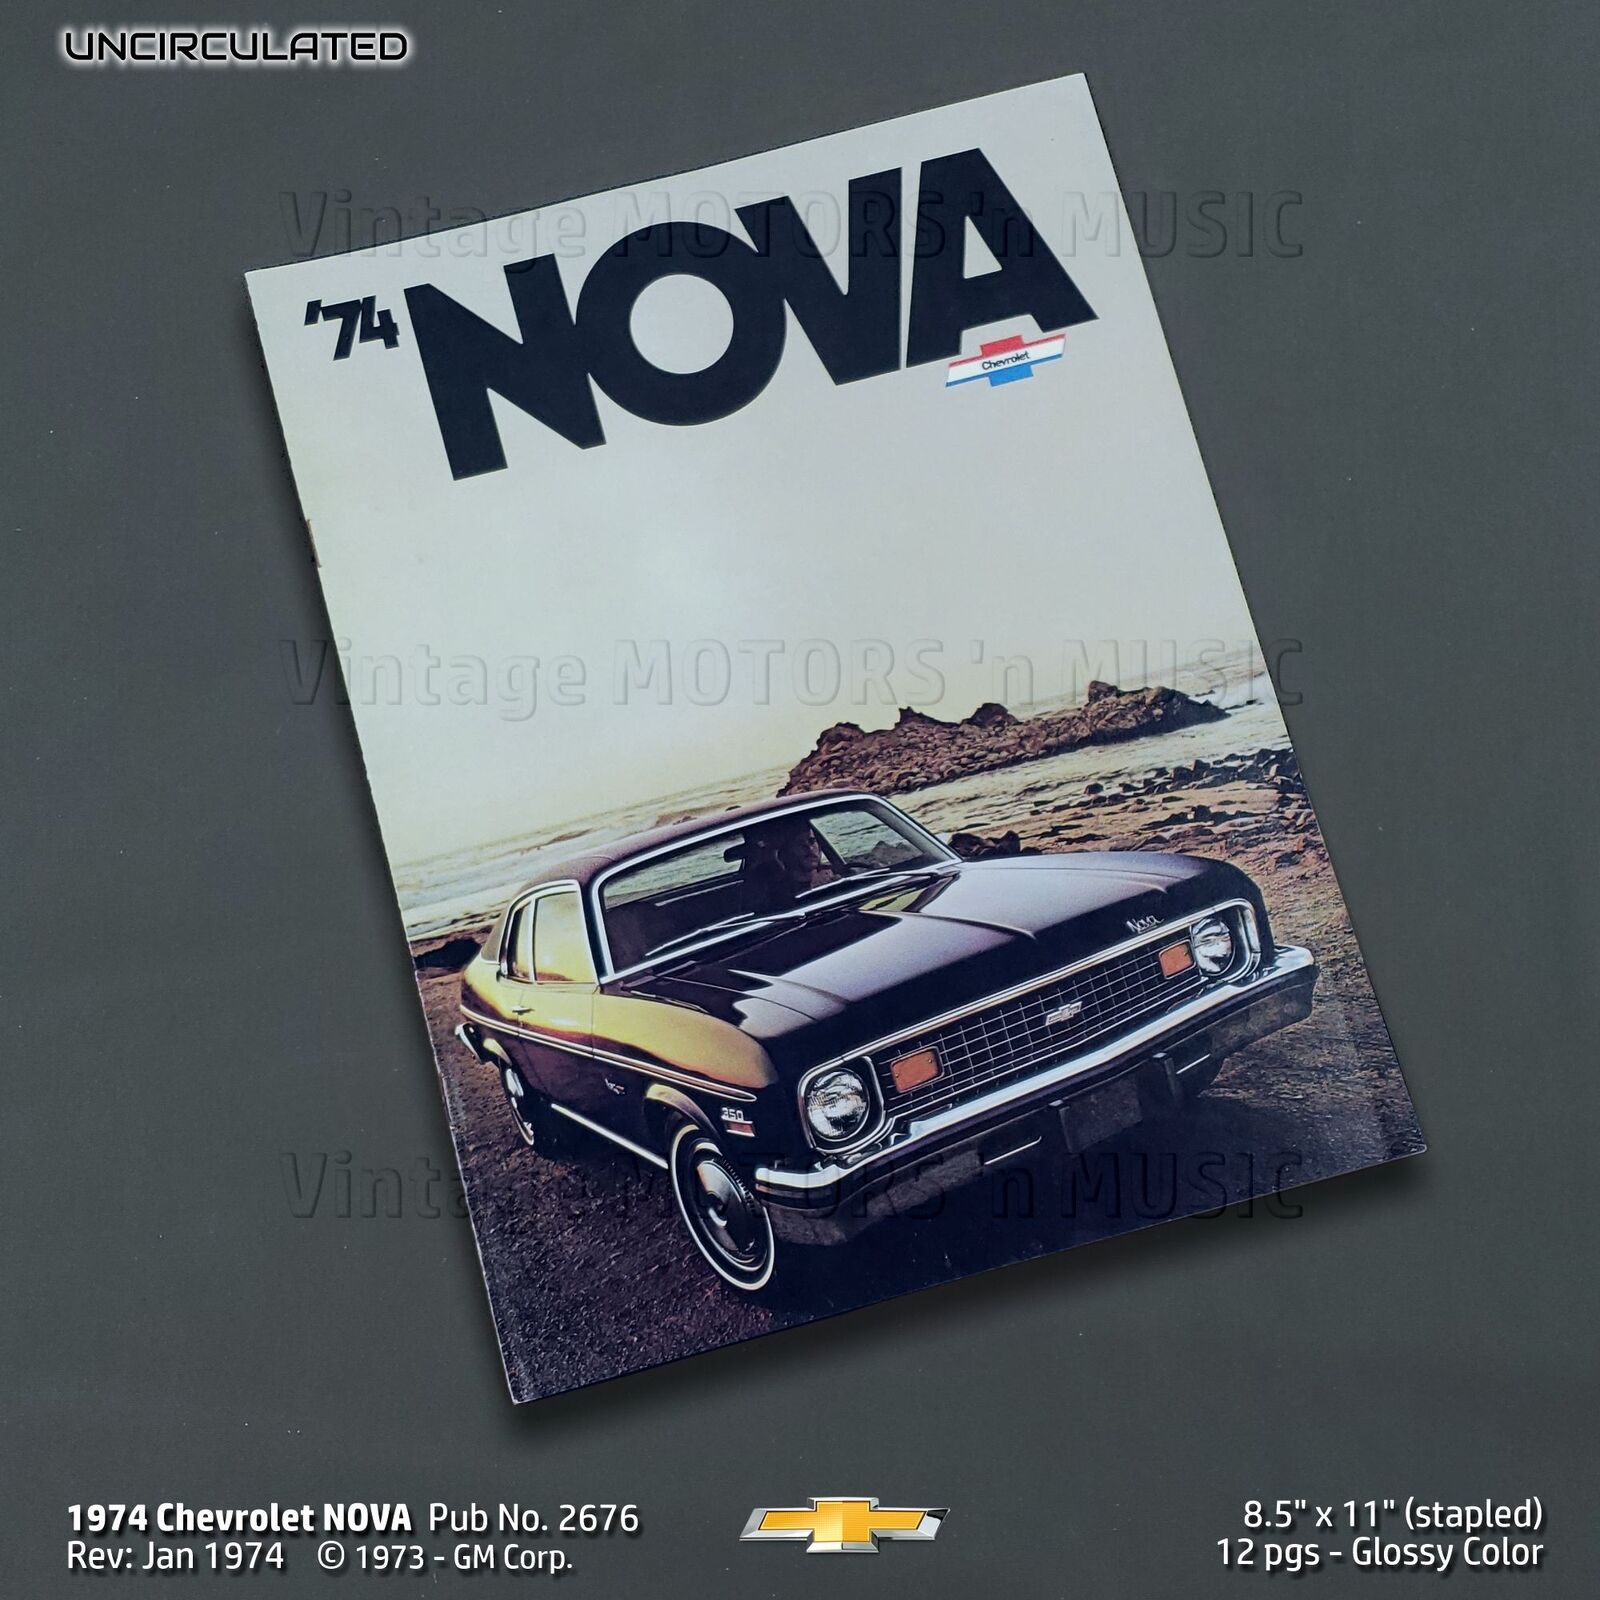 UNCIRCULATED 1974 Chevrolet Nova 12 pg Glossy Color Brochure #2676 Rev 1/74